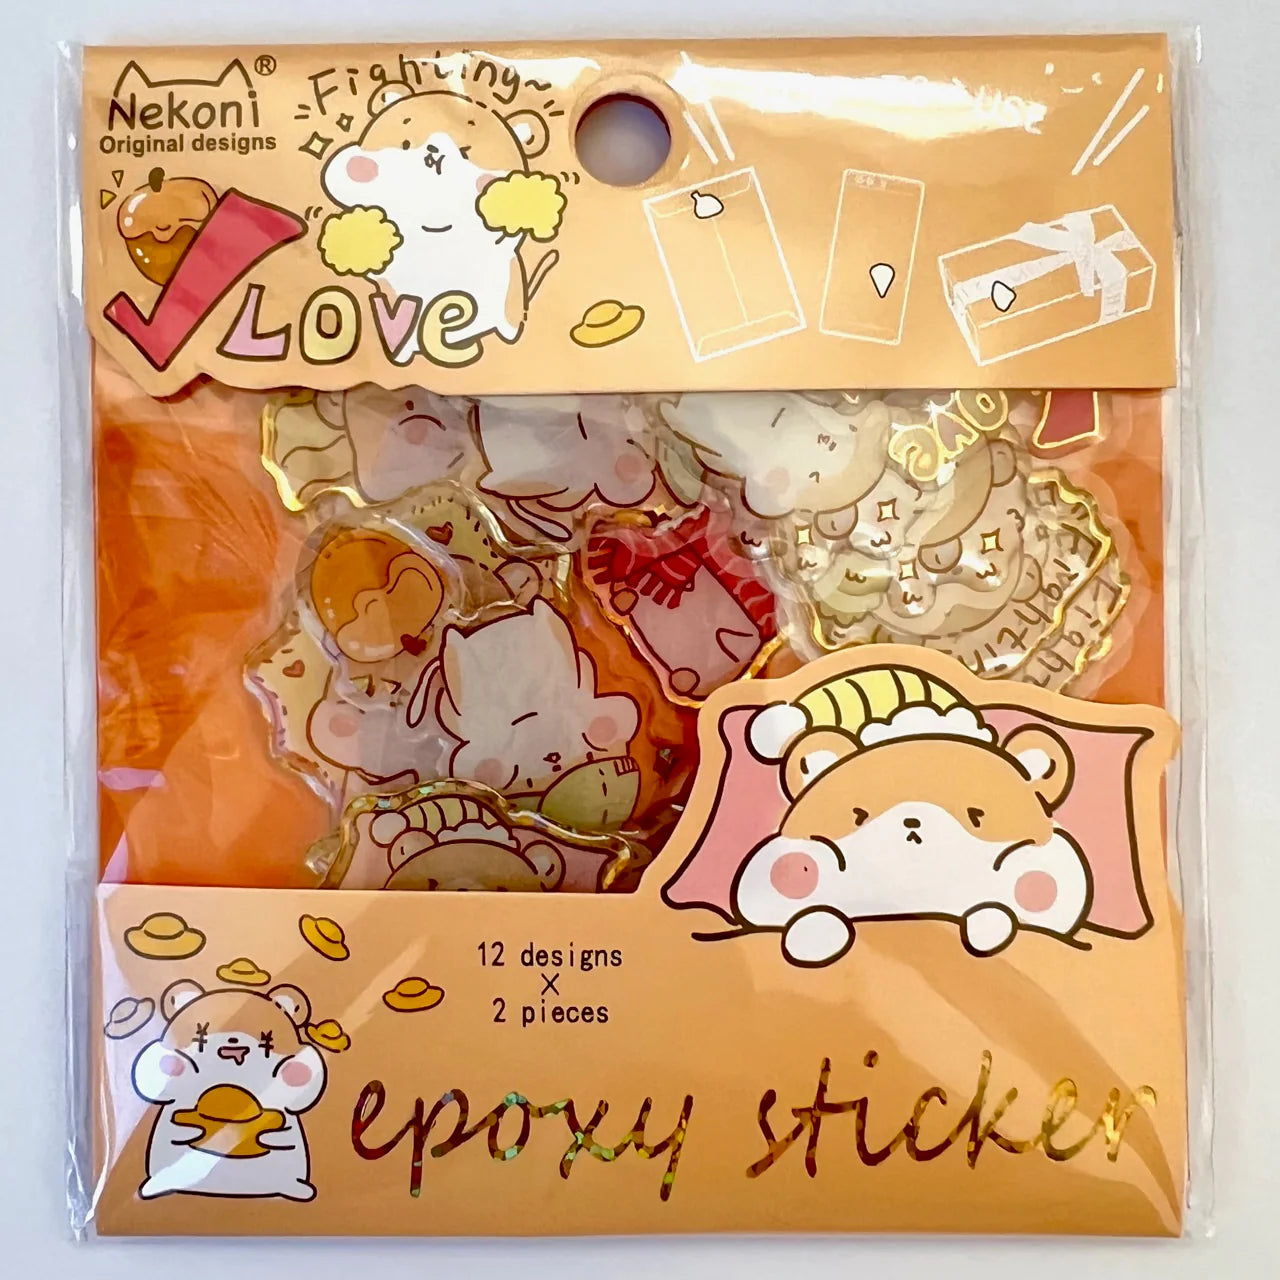 Nekoni Hamster Shiny Stickers 51087